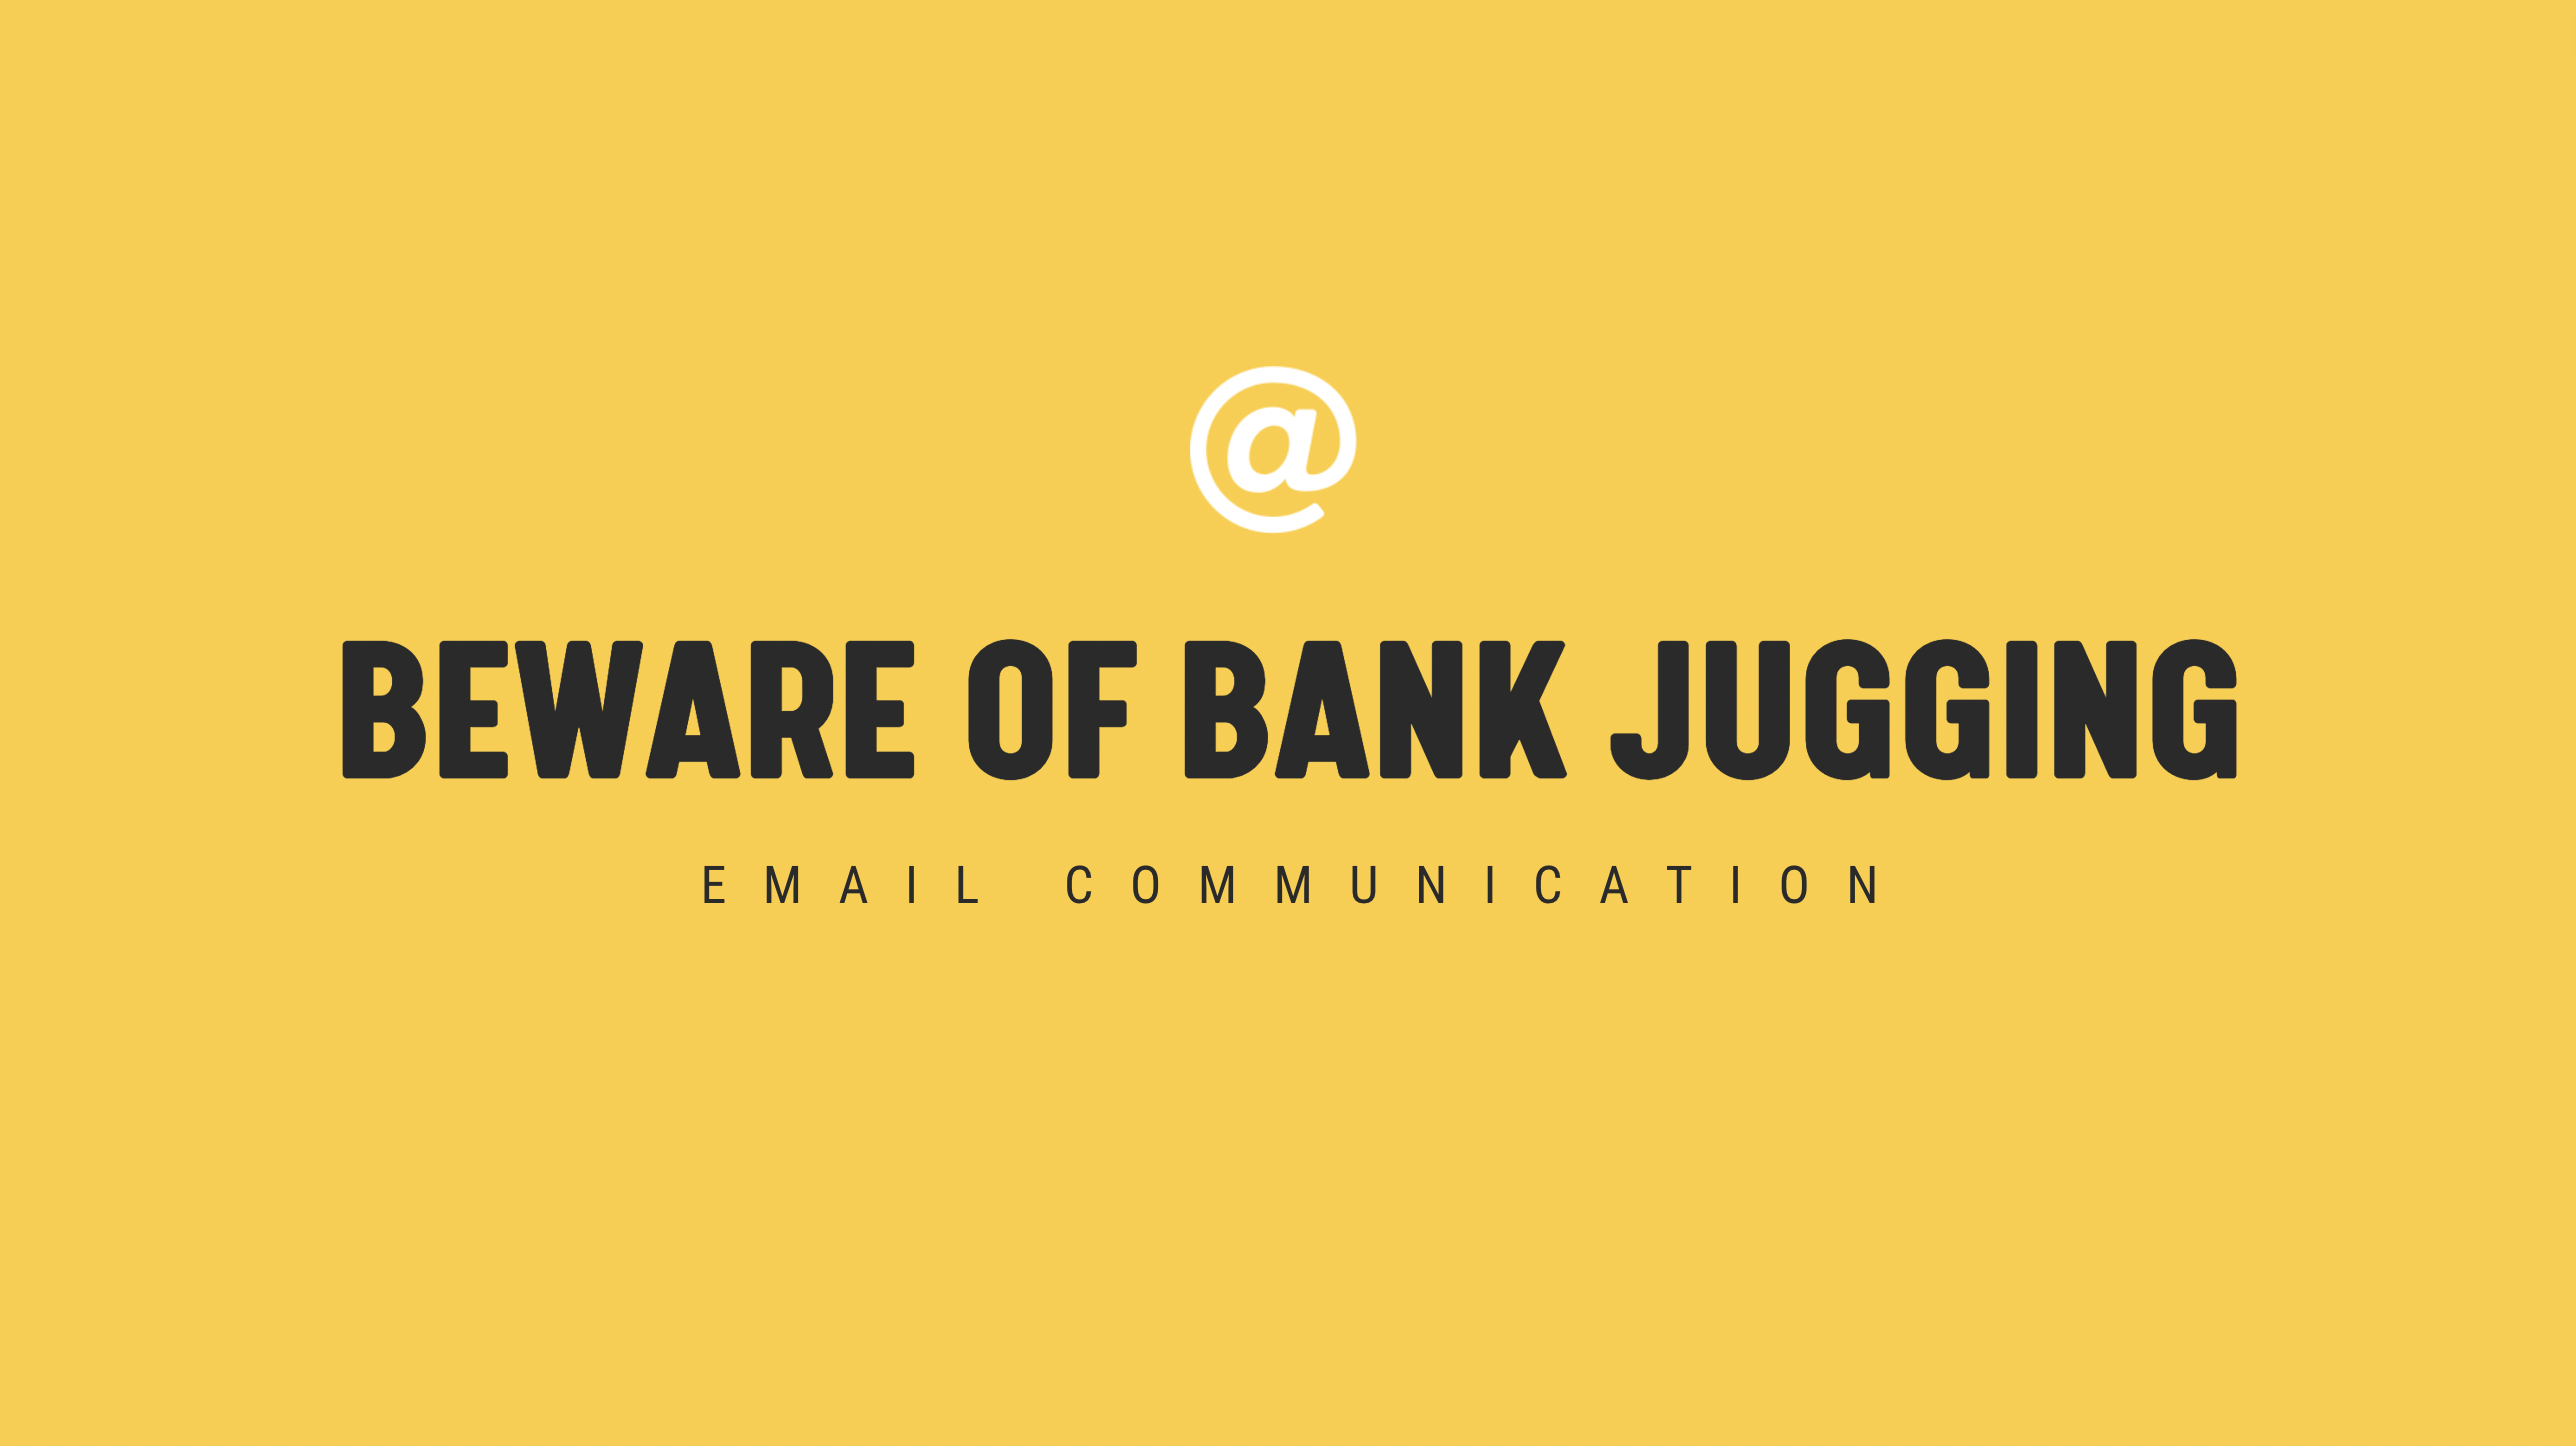 [NEW] Beware of Bank Jugging - Single Email